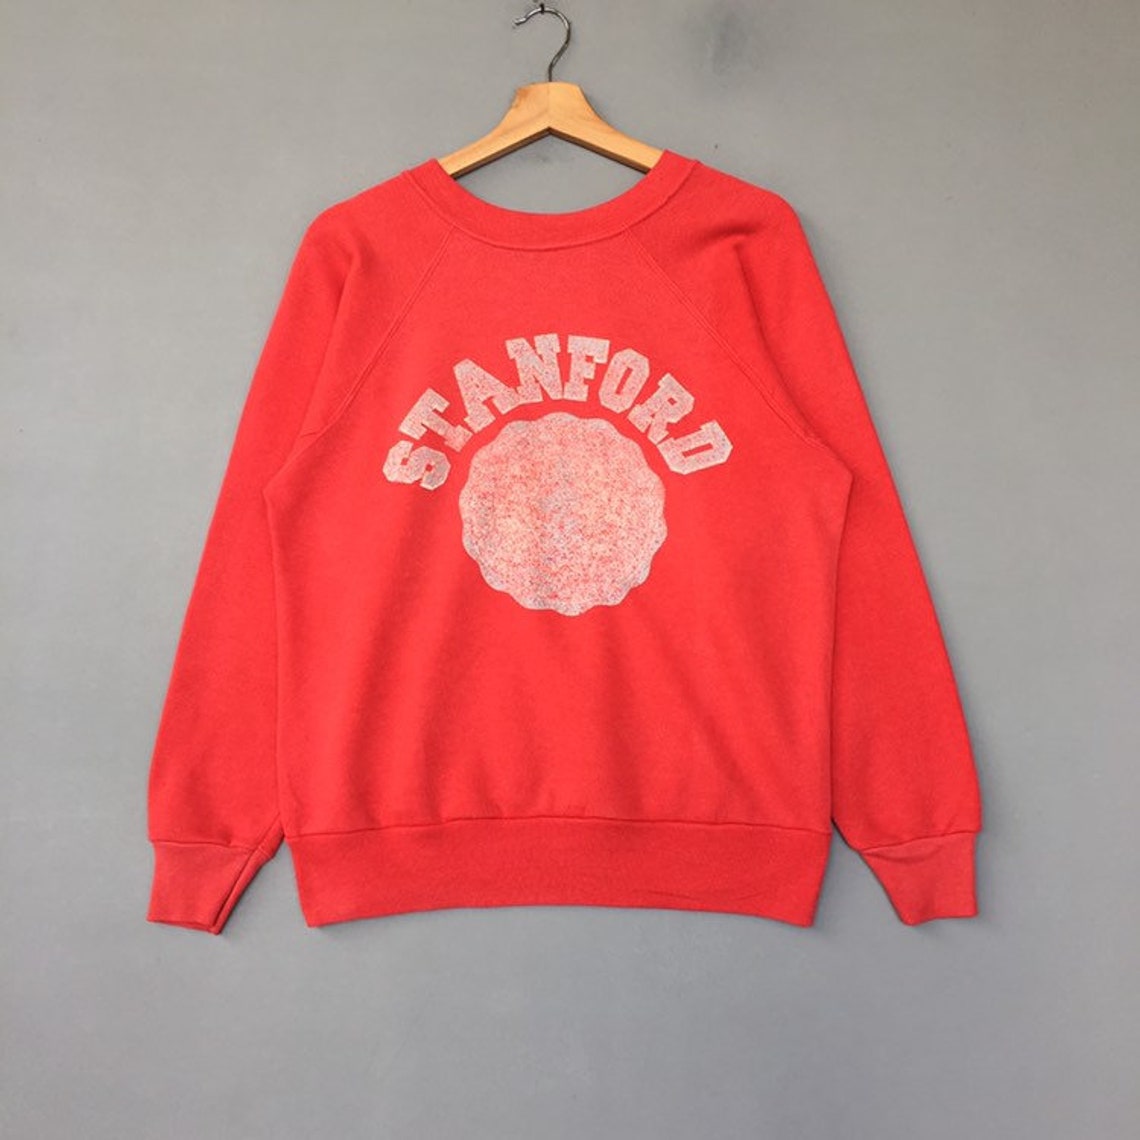 Rare Vintage Stanford Sweatshirt crew neck print out logo | Etsy